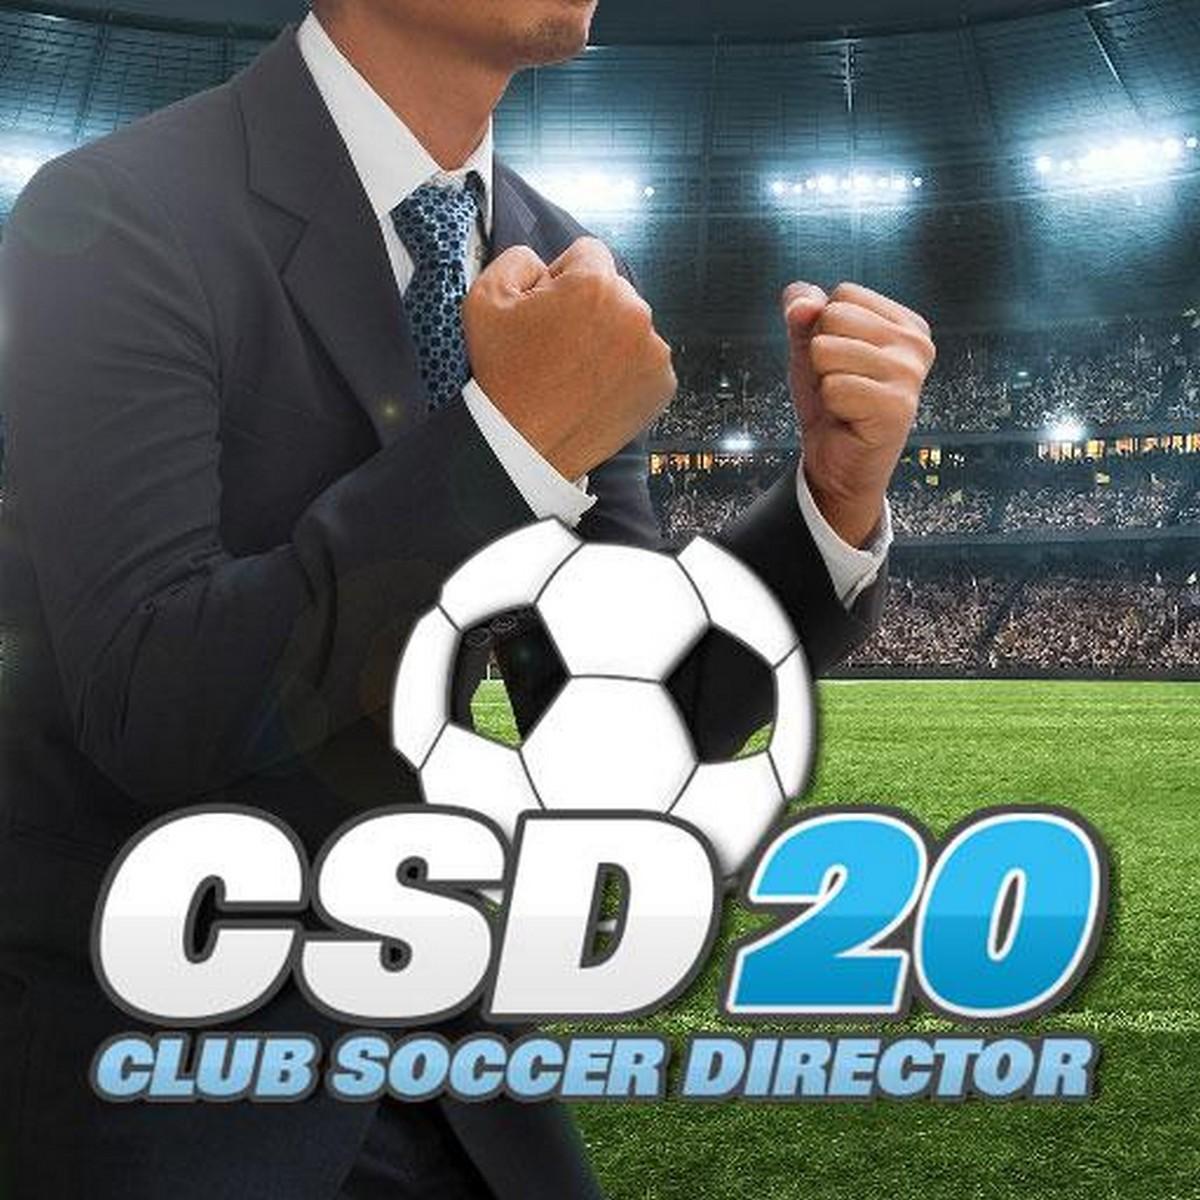 Club Soccer Director 2020 APK MOD